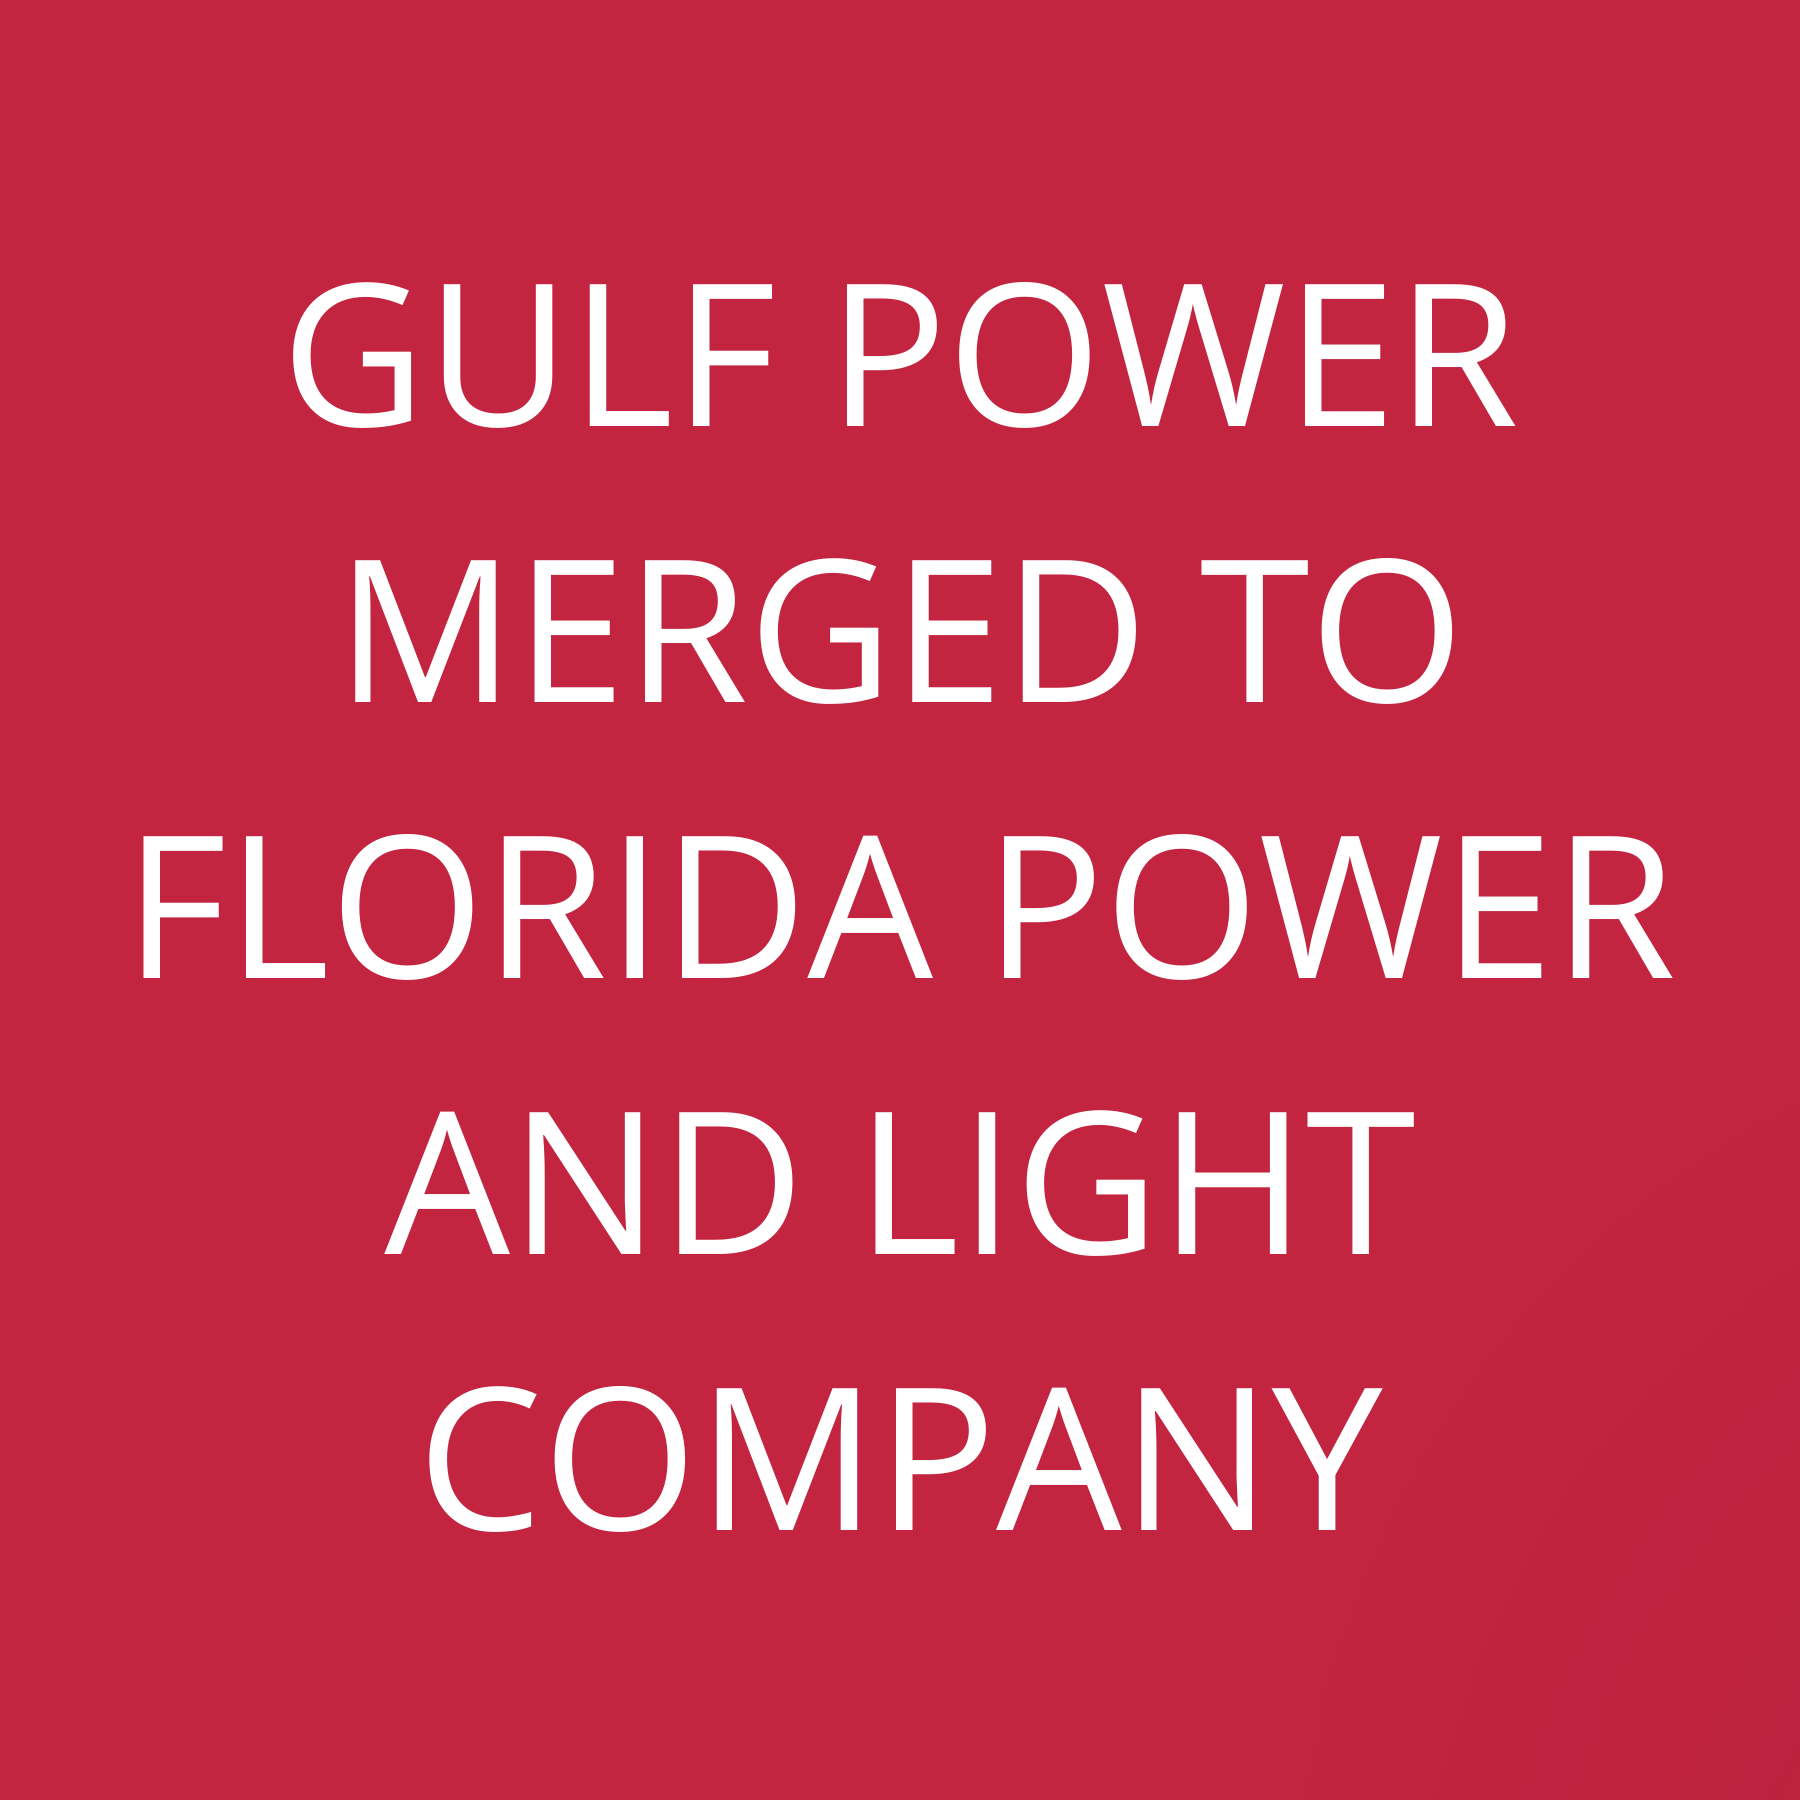 Gulf Power merged to Florida Power and Light company